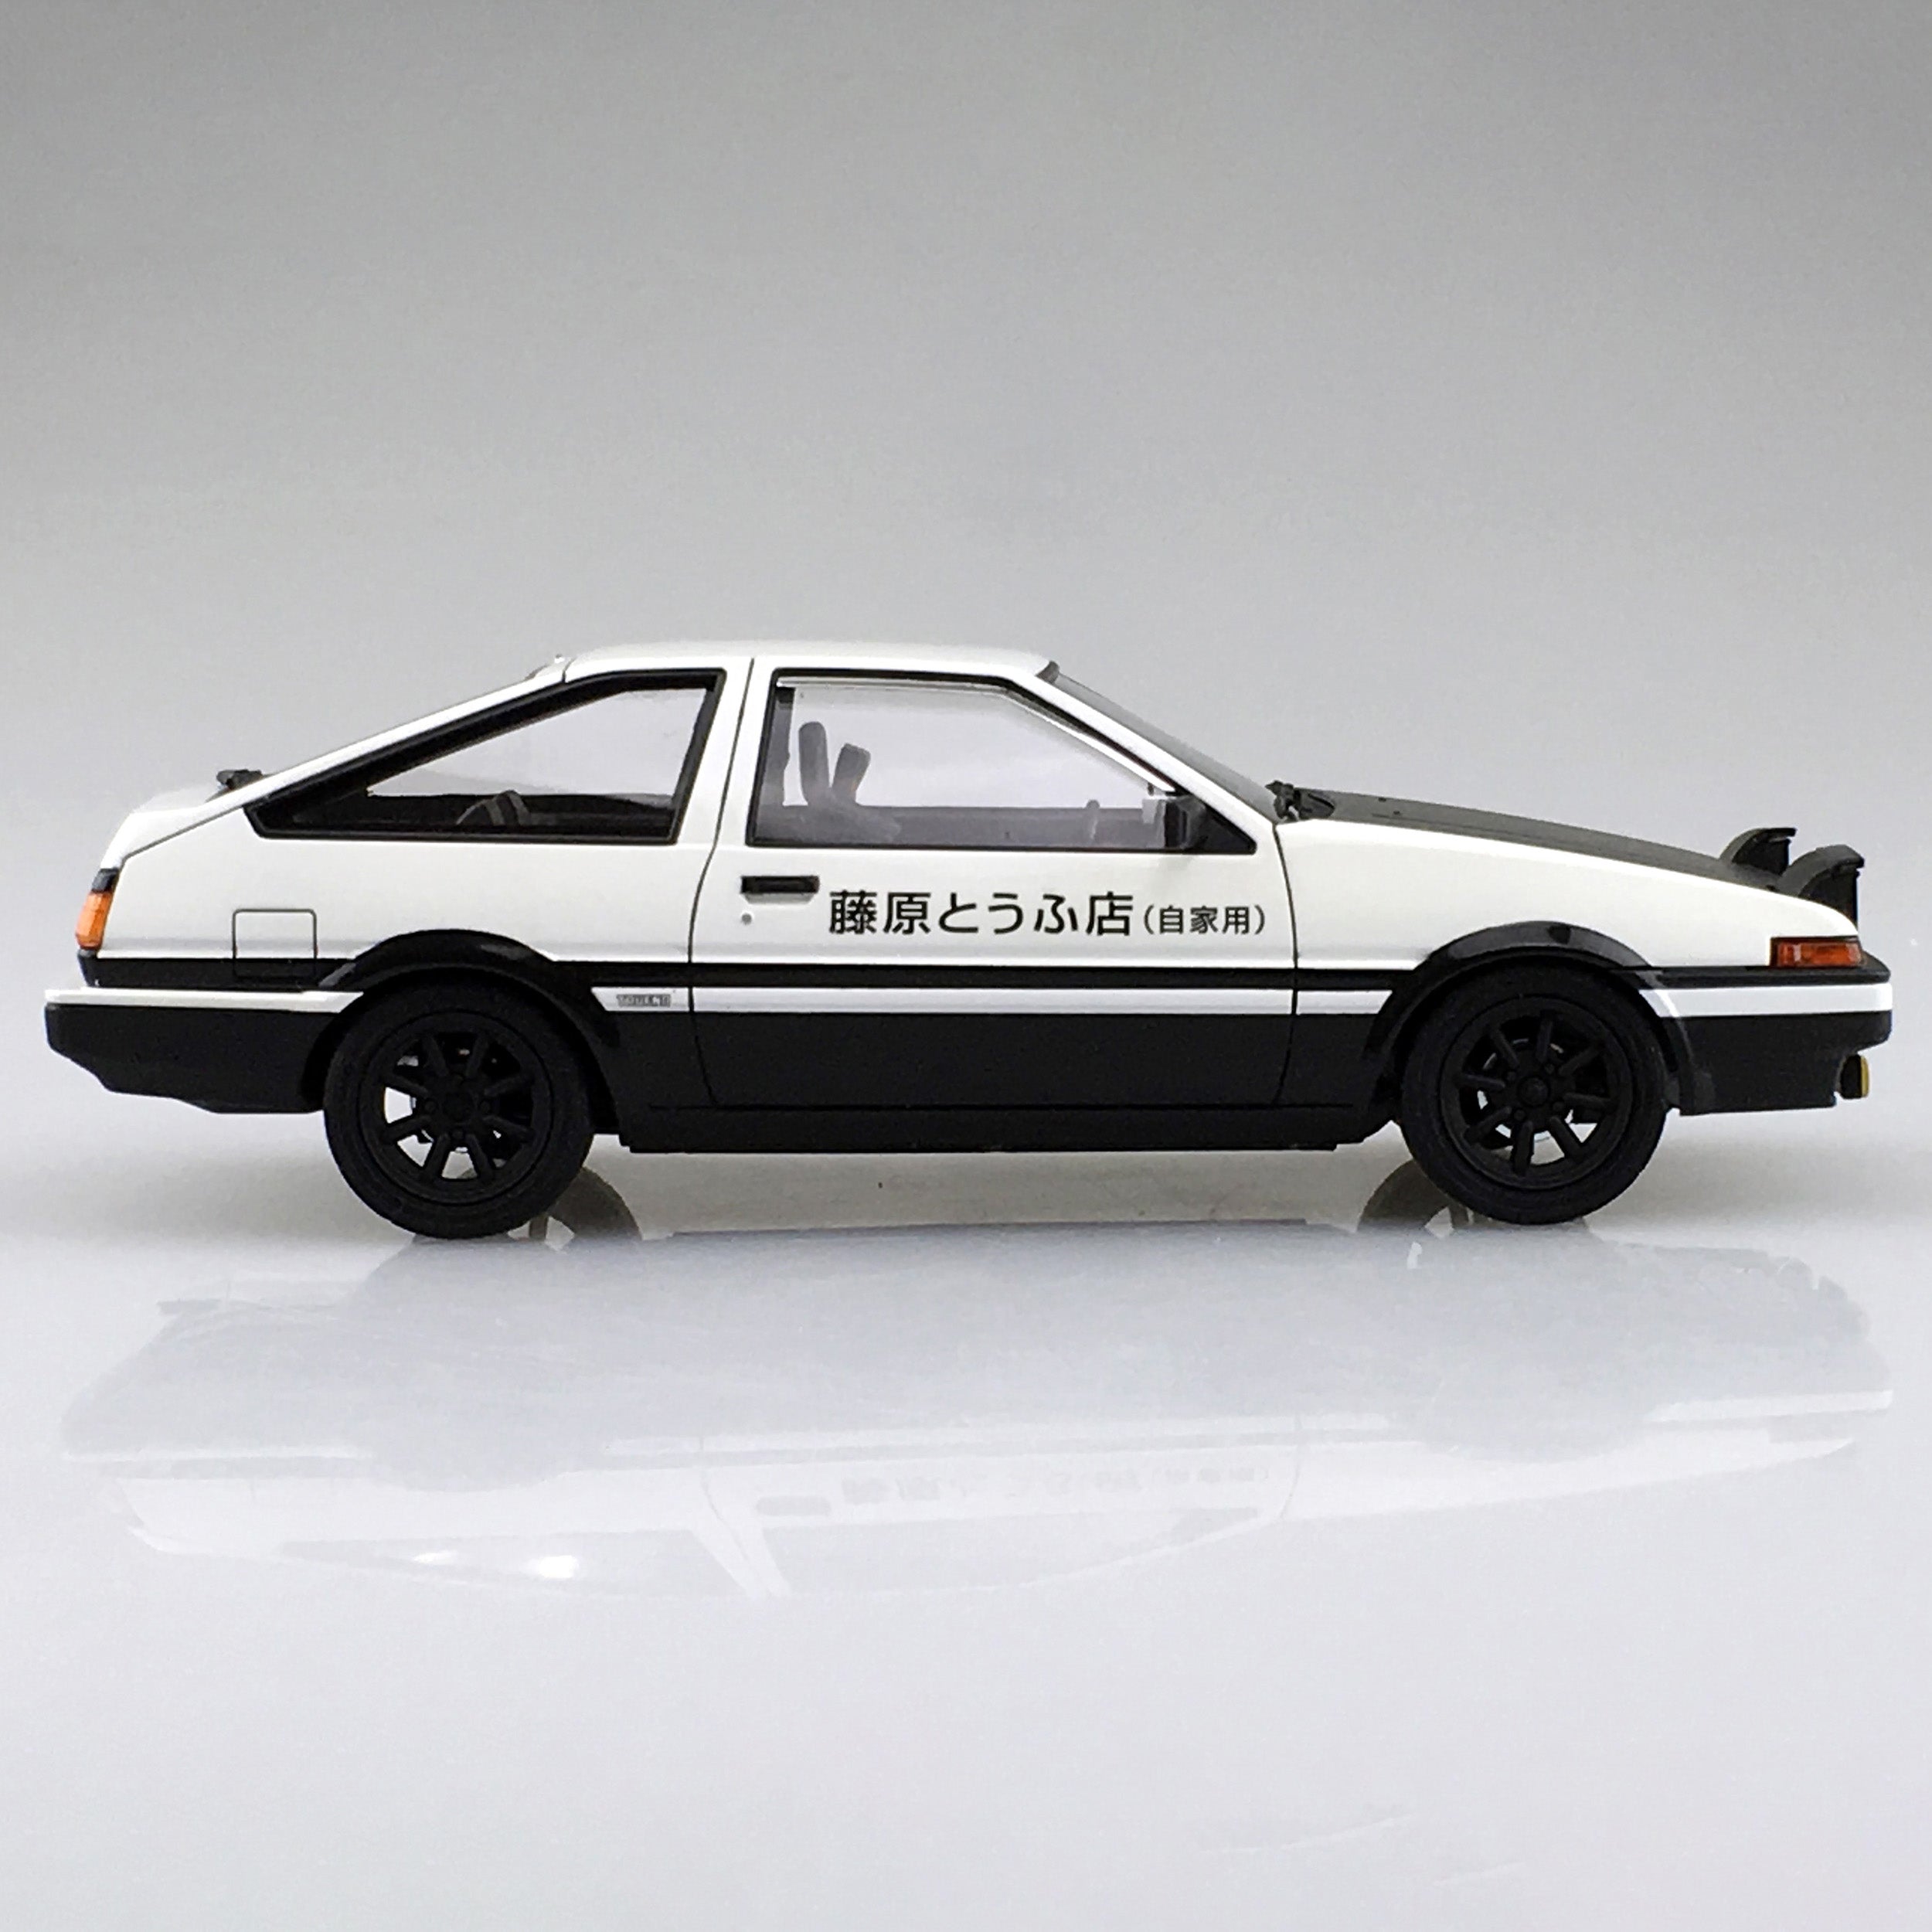 Aoshima - Initial D - No. 1 - Takumi Fujiwara AE86 Trueno Project D Model Model Kit (1/24 Scale) - Marvelous Toys